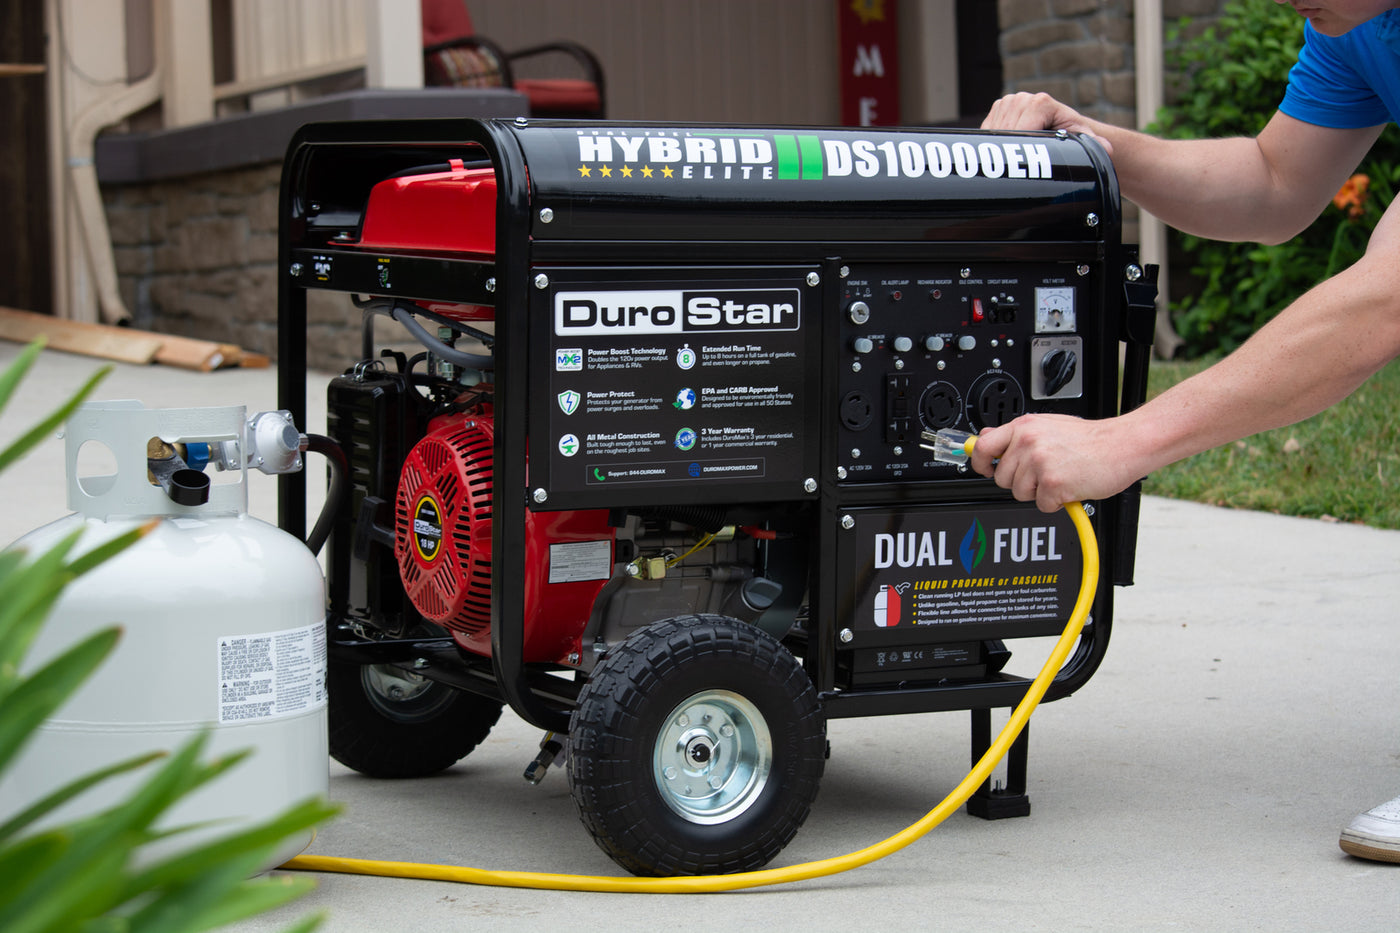 DuroStar  10,000 Watt Dual Fuel Portable Generator